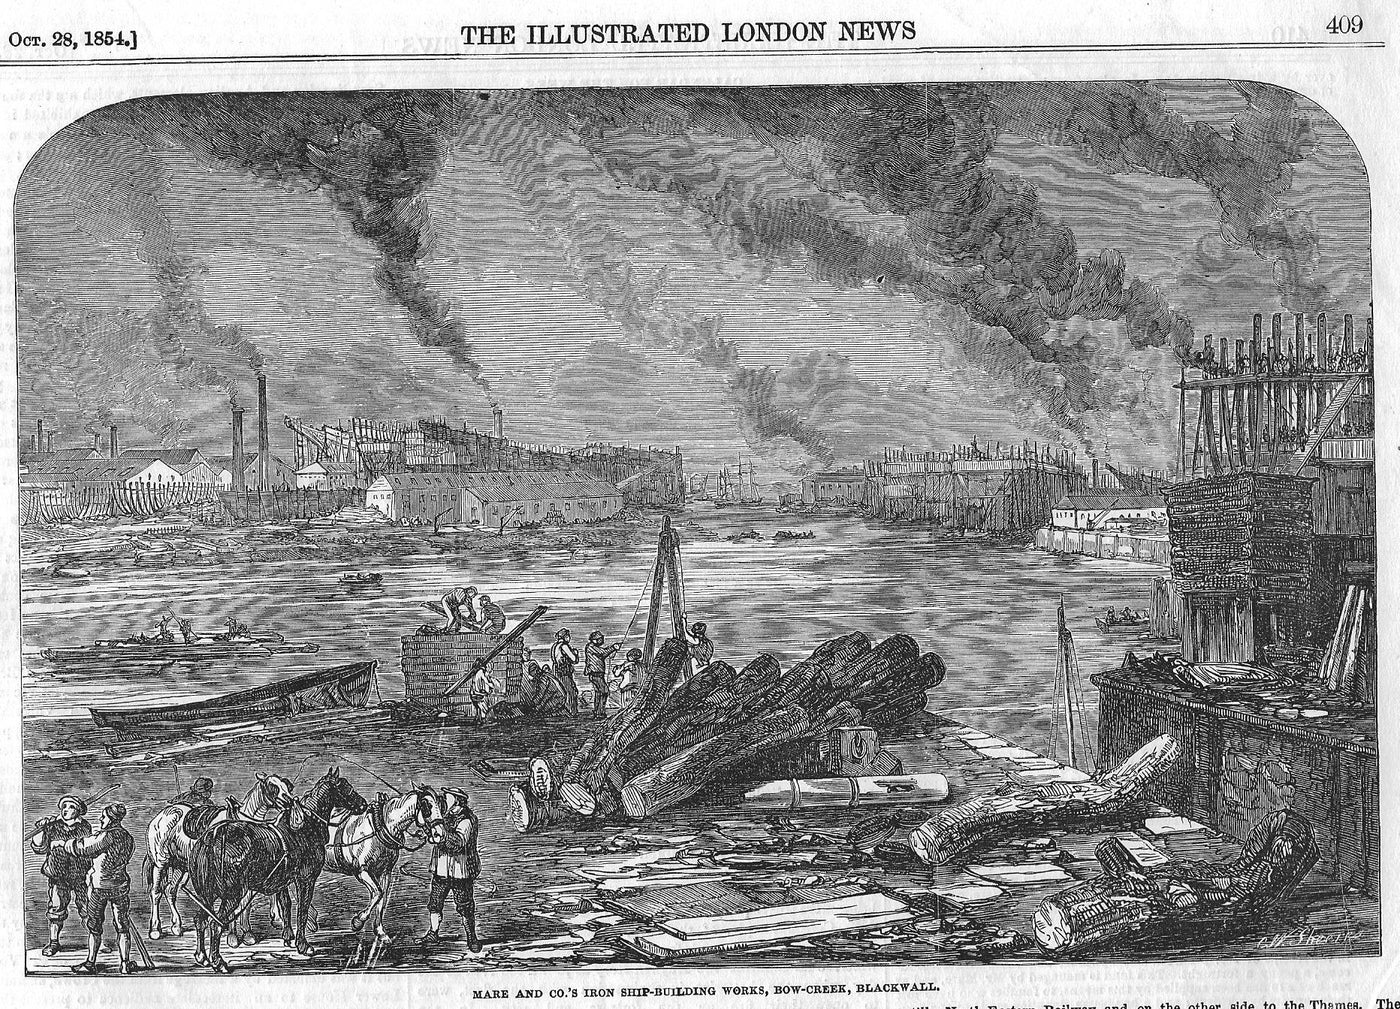 Blackwall iron ship building works Bow Creek antique print 1854